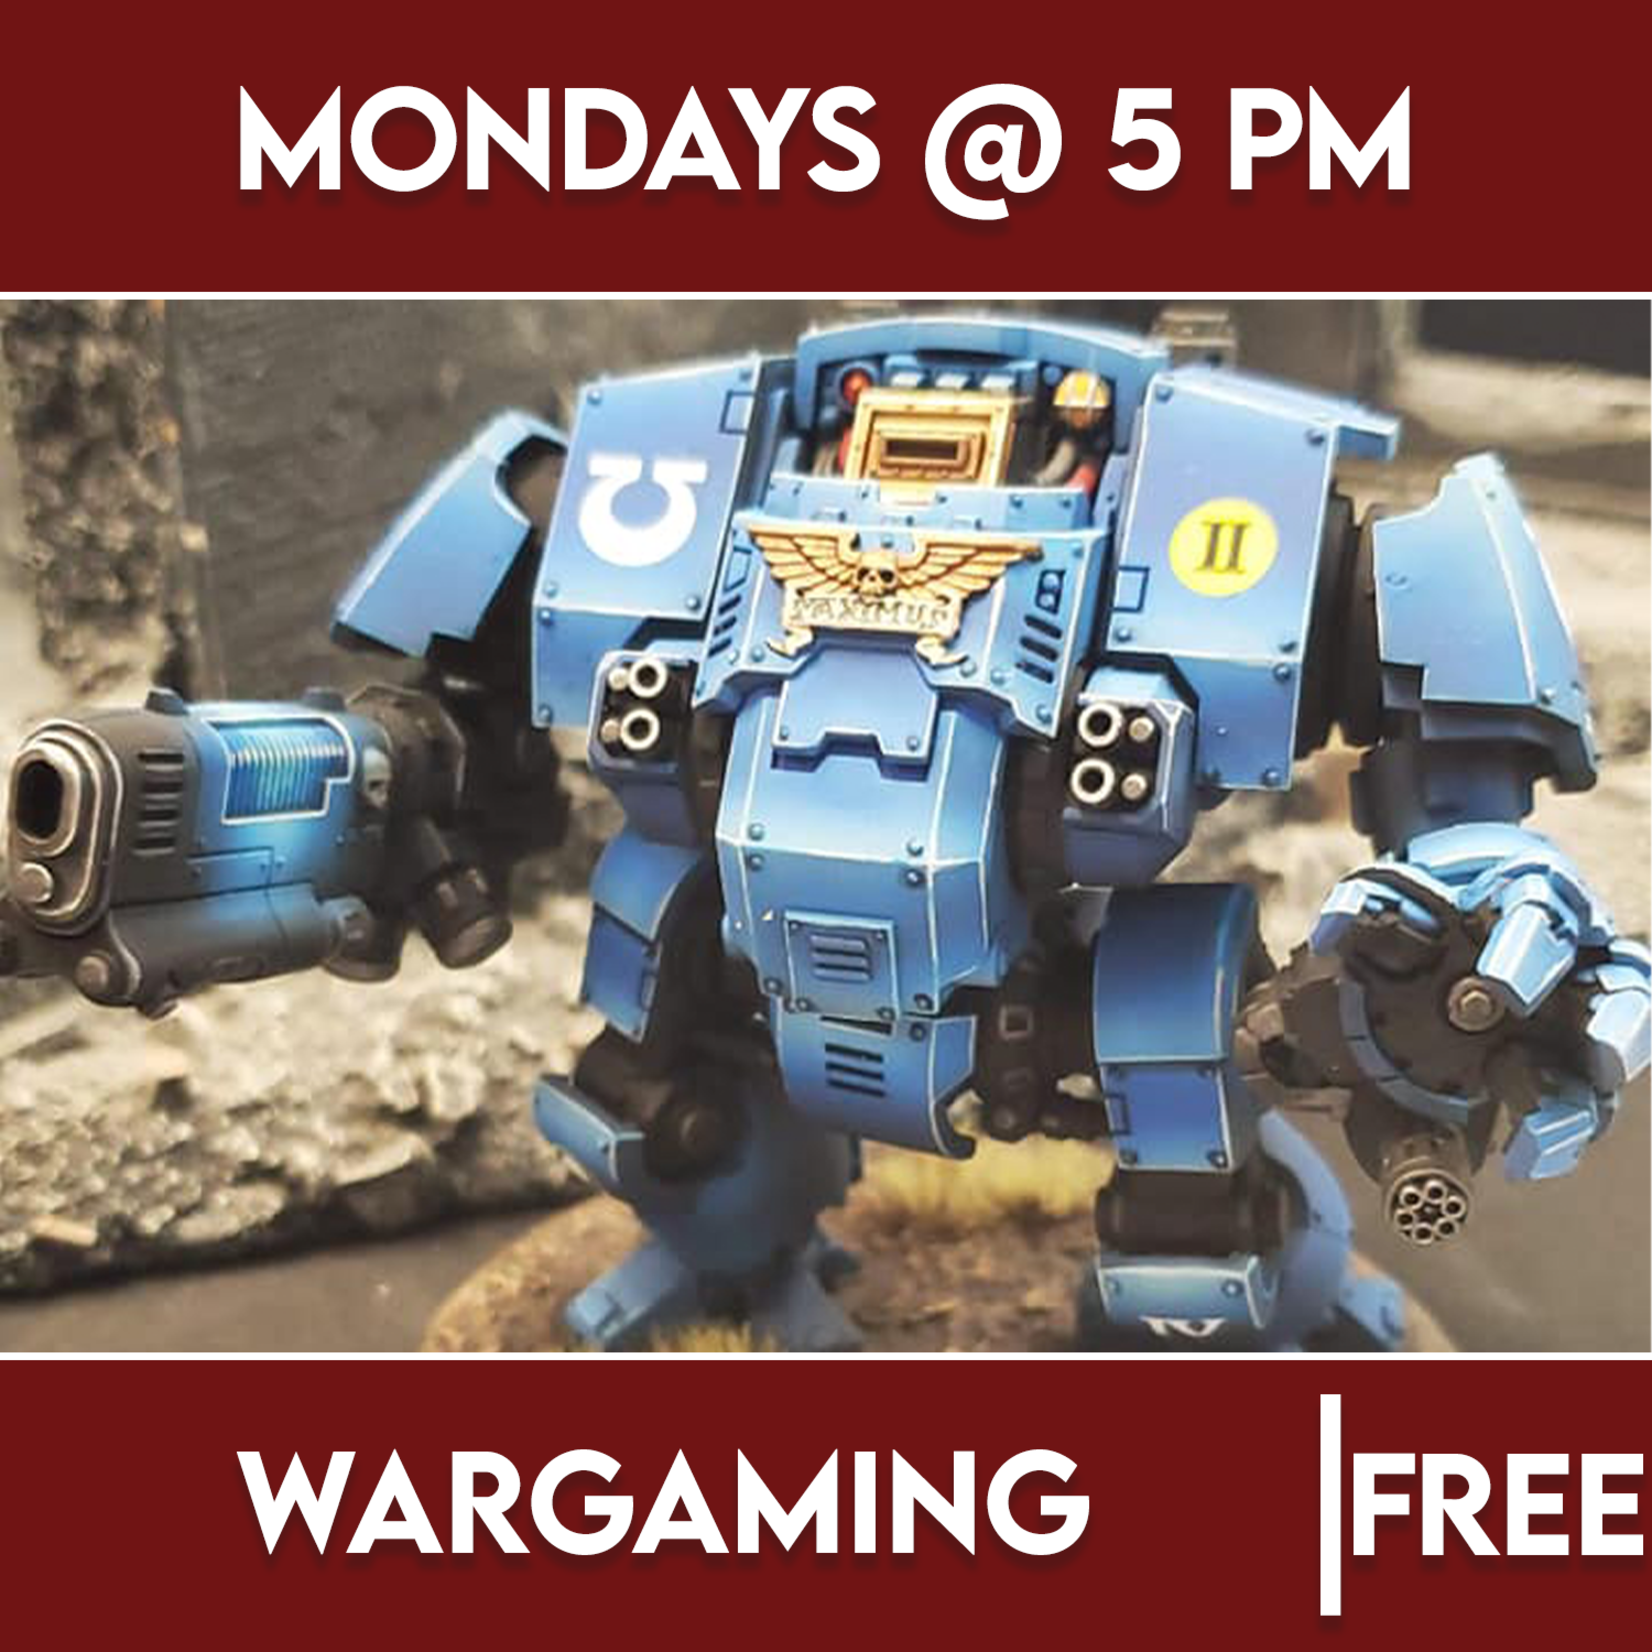 Warhammer Events 07/29 Monday @ 5 PM - Miniature Wargaming